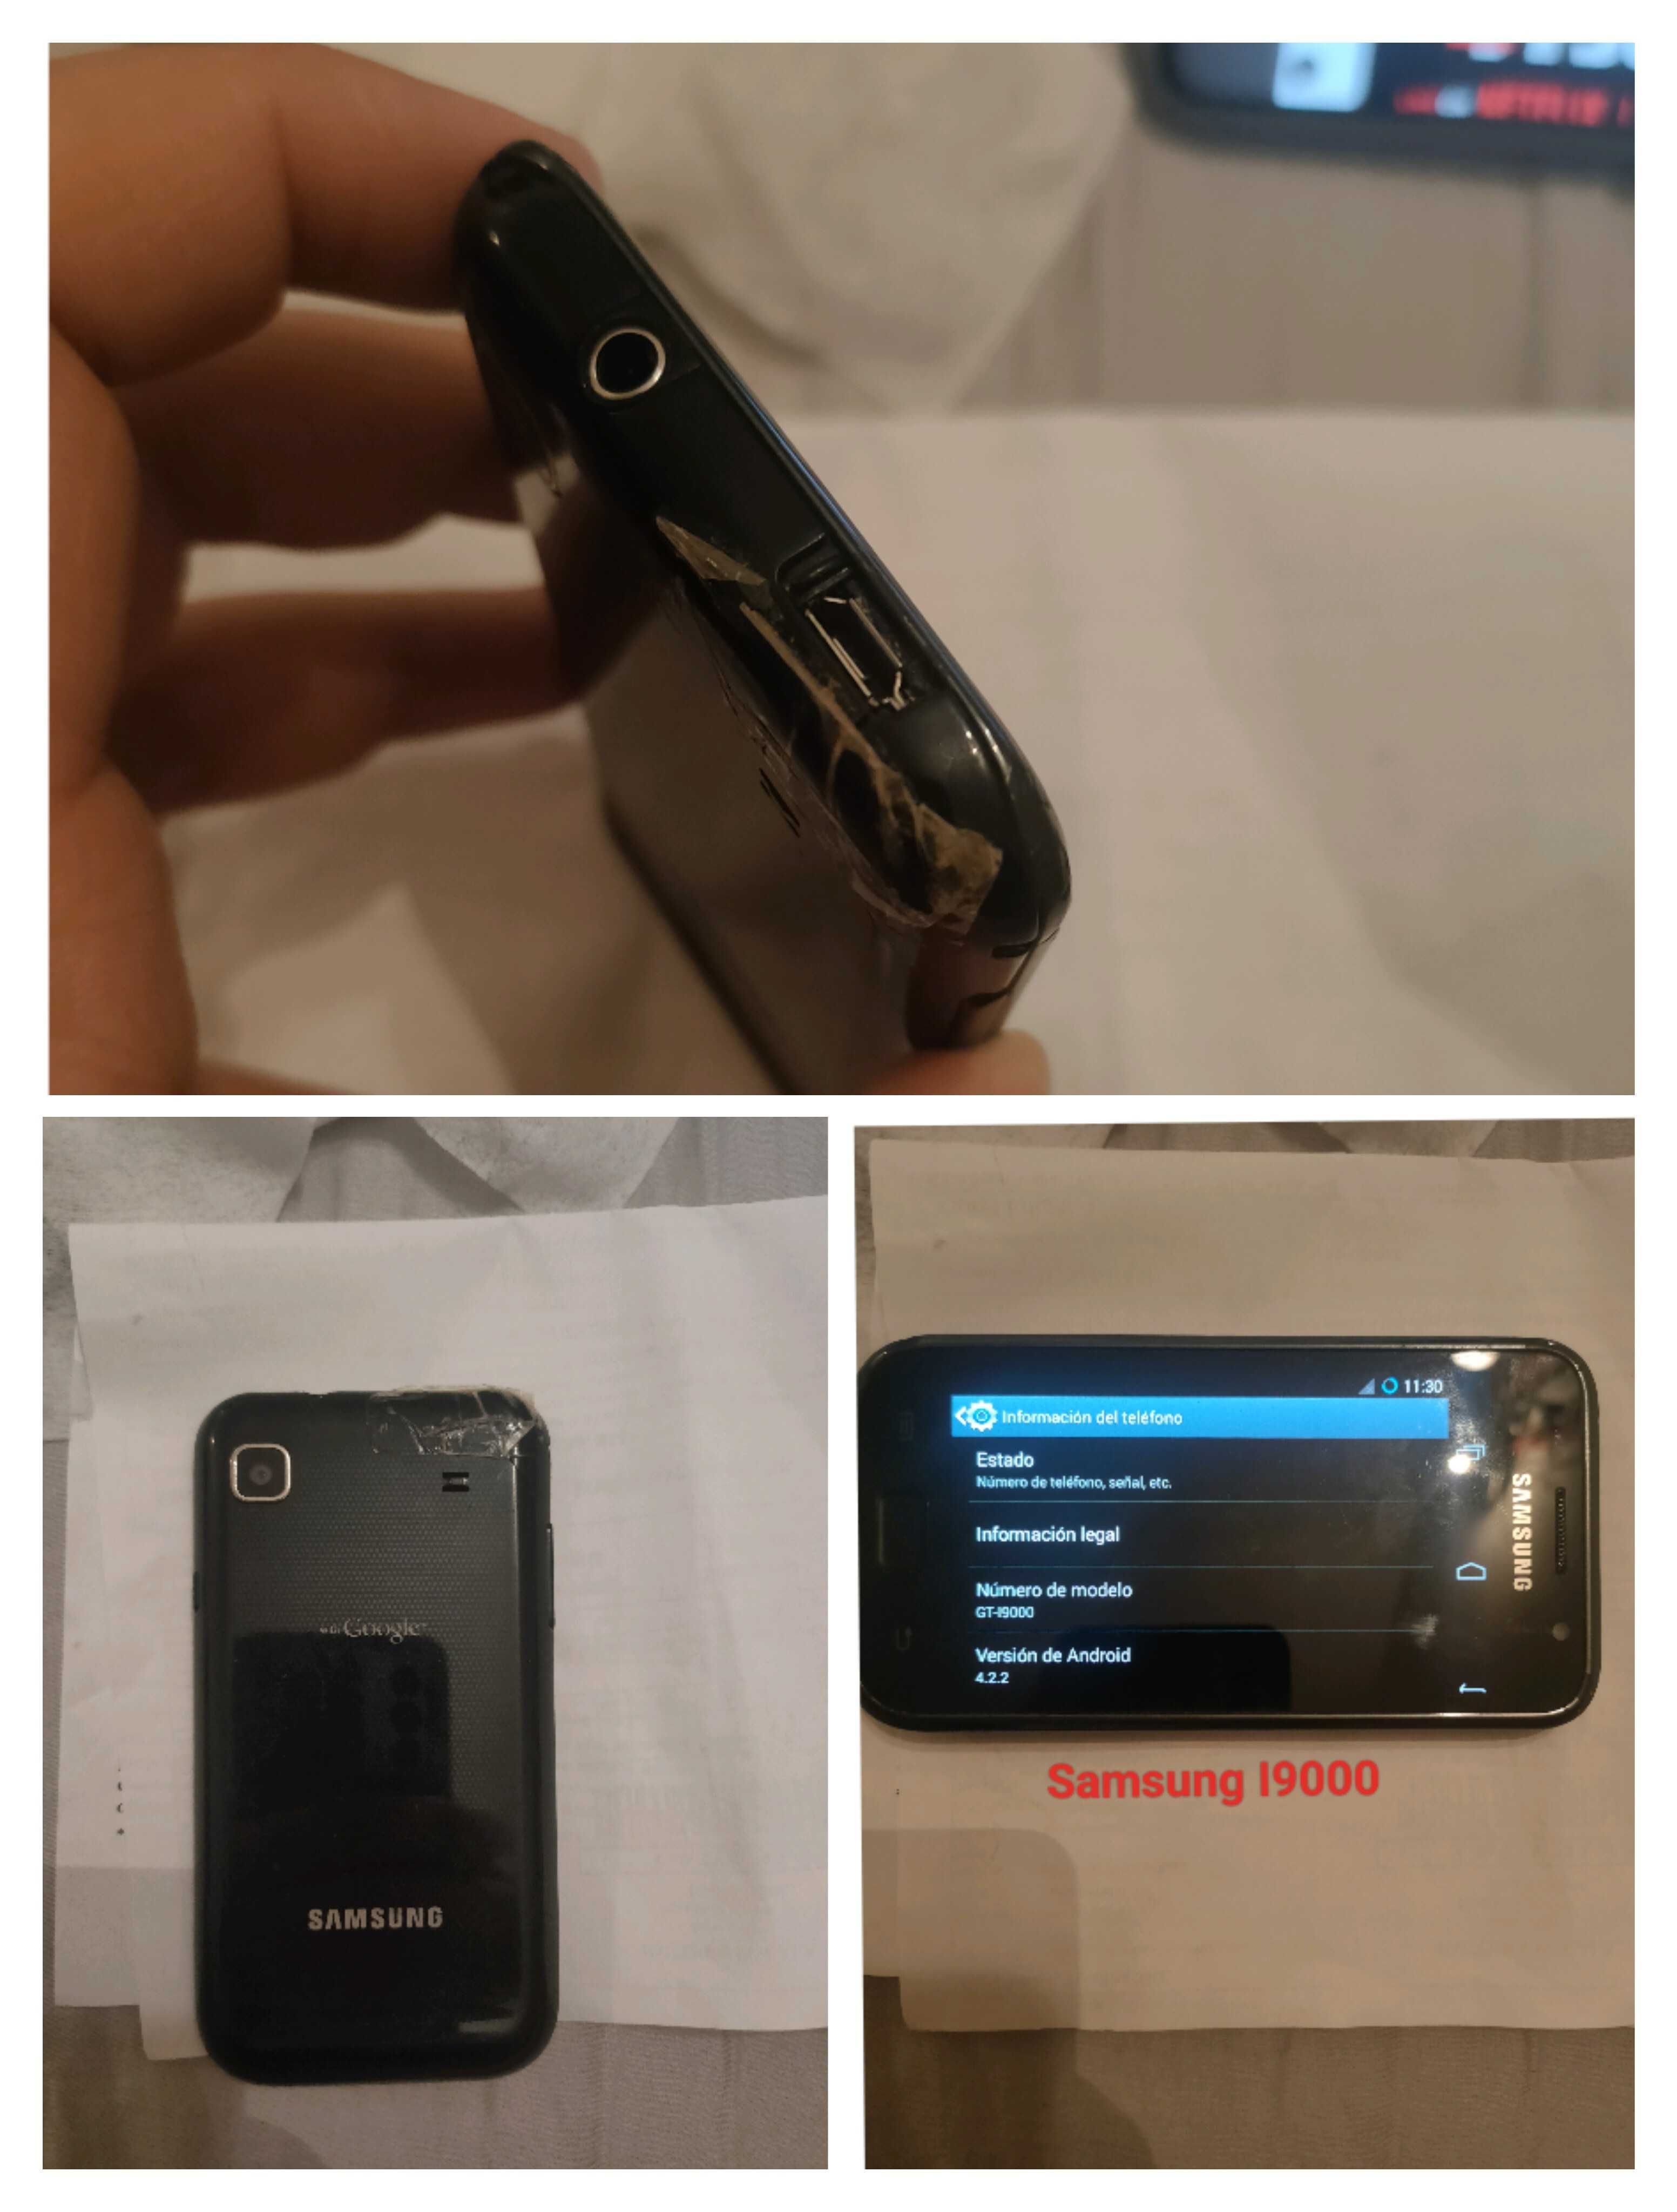 Samsung GT-S7390, Samsung I9000, LG Leon 4G-H340n